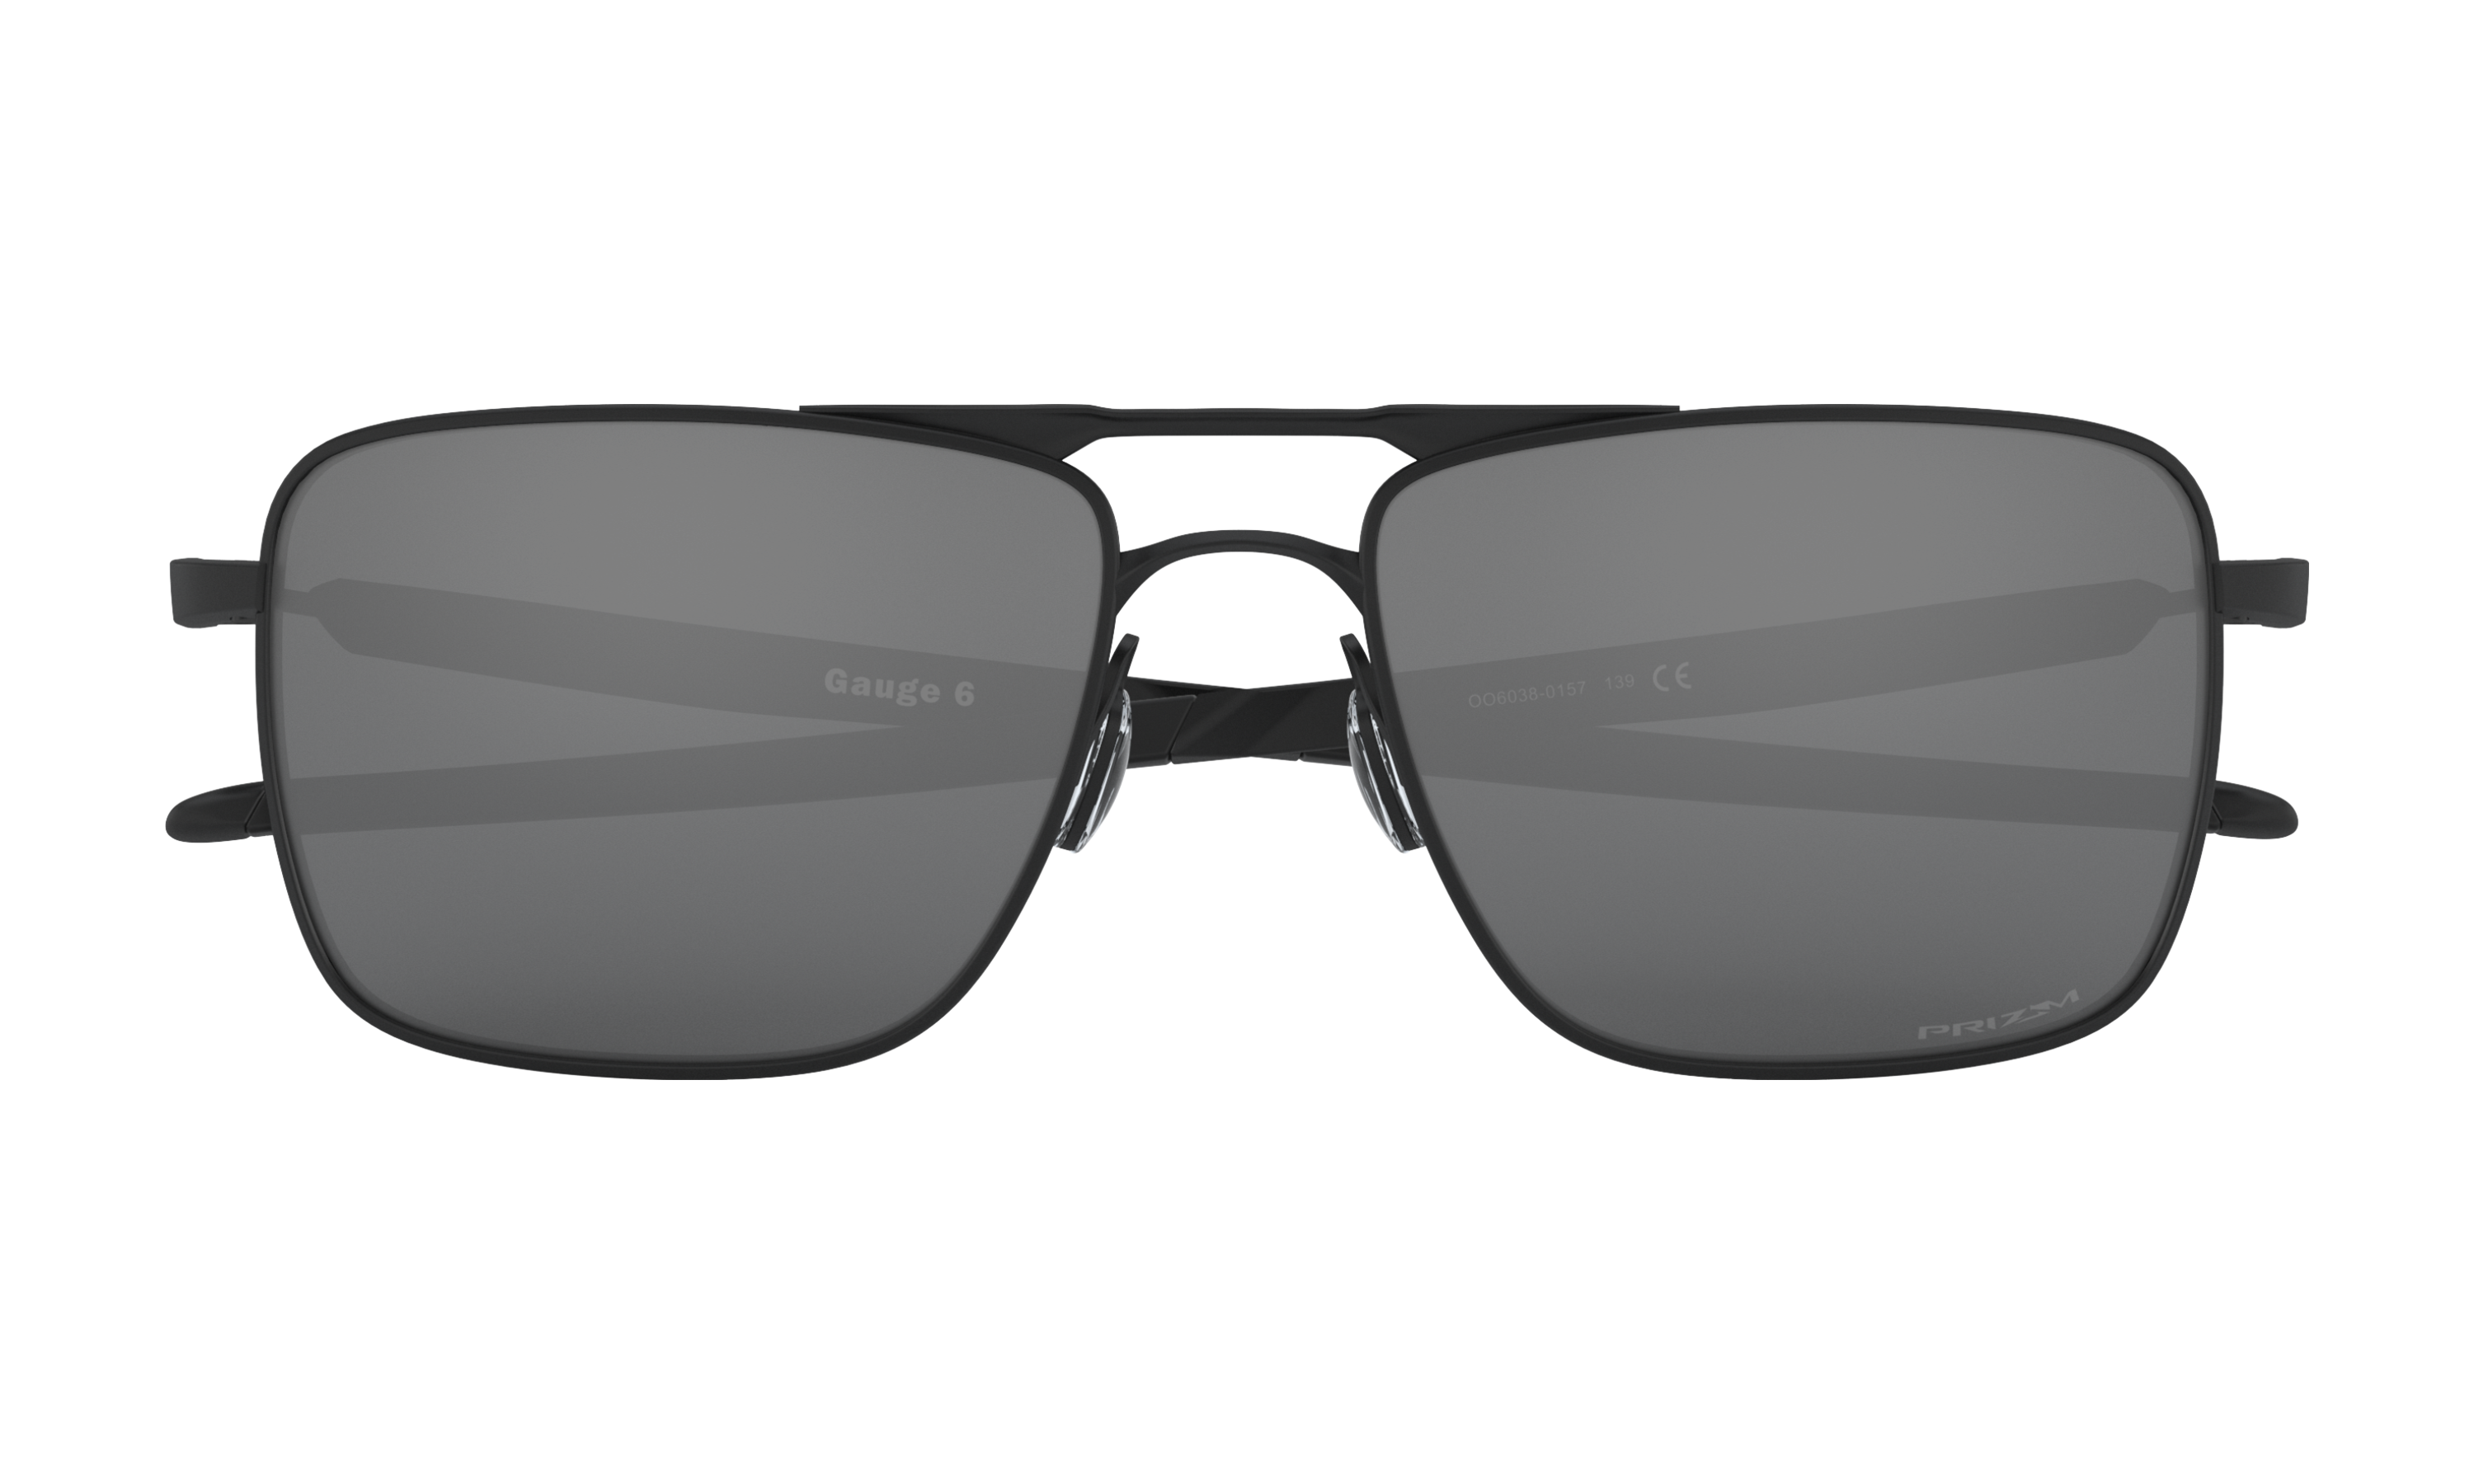 Gauge 6 Powder Coal Sunglasses | Oakley® US